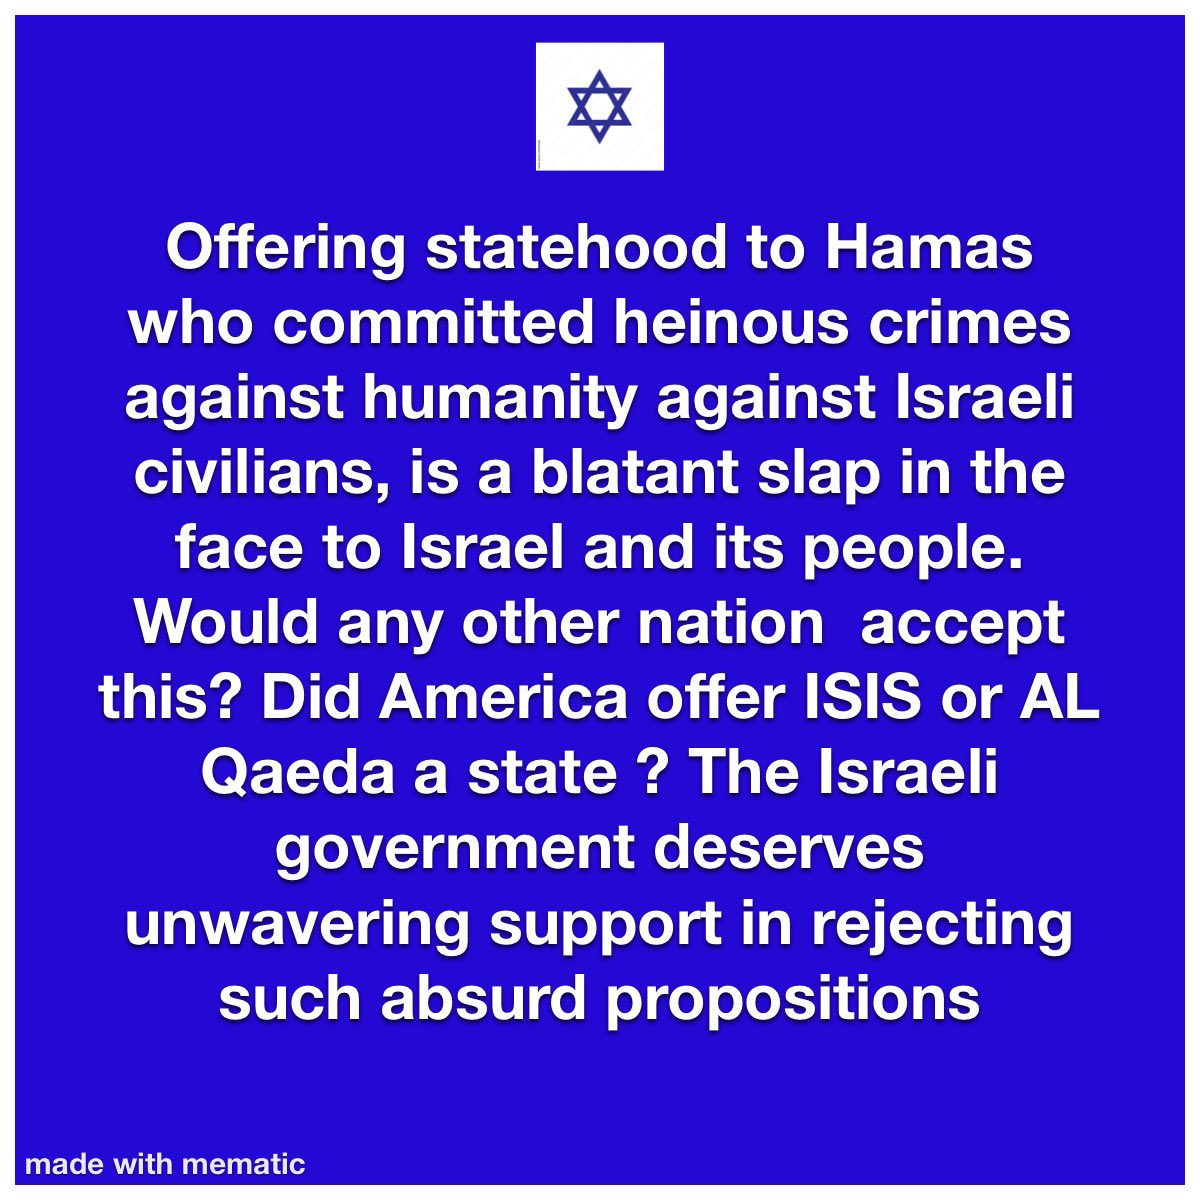 Hamas statehood